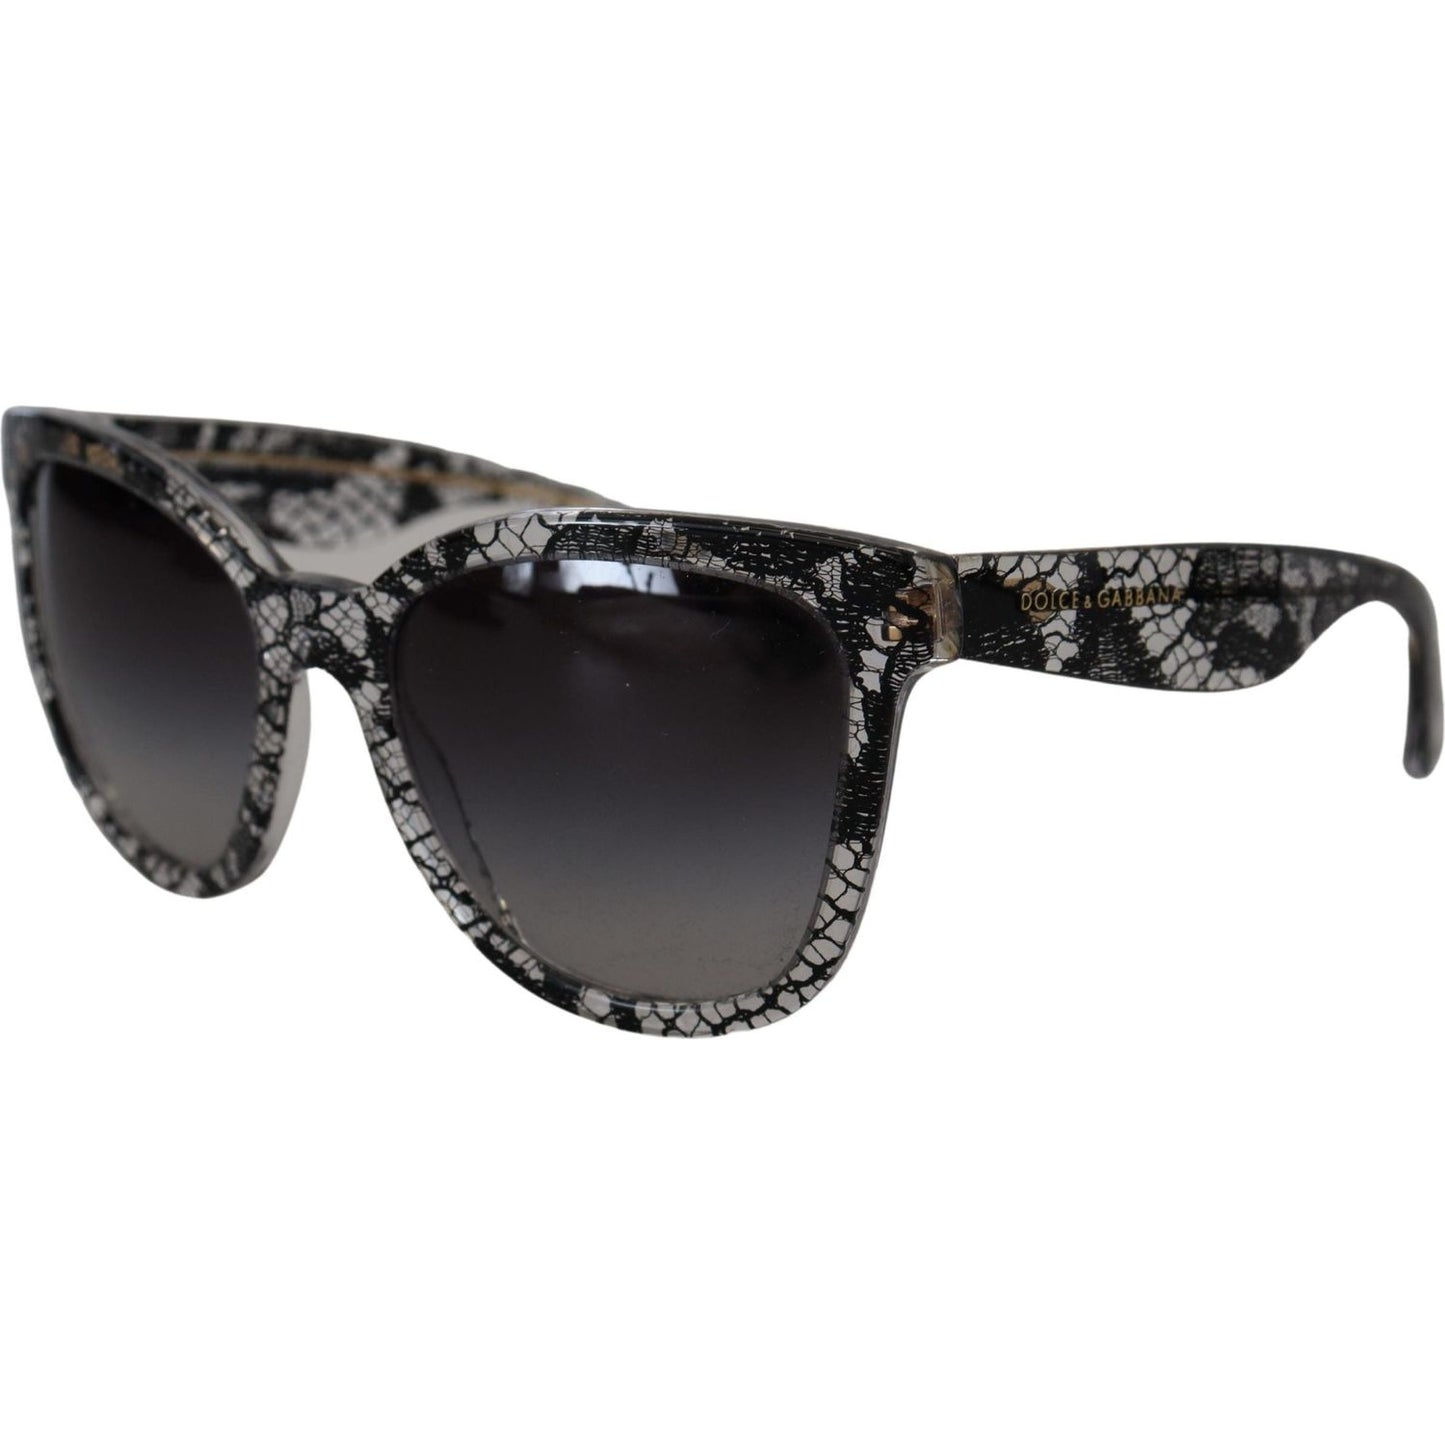 Dolce & Gabbana Elegant White Lace Applique Sunglasses black-lace-white-acetate-frame-shades-dg4190-sunglasses